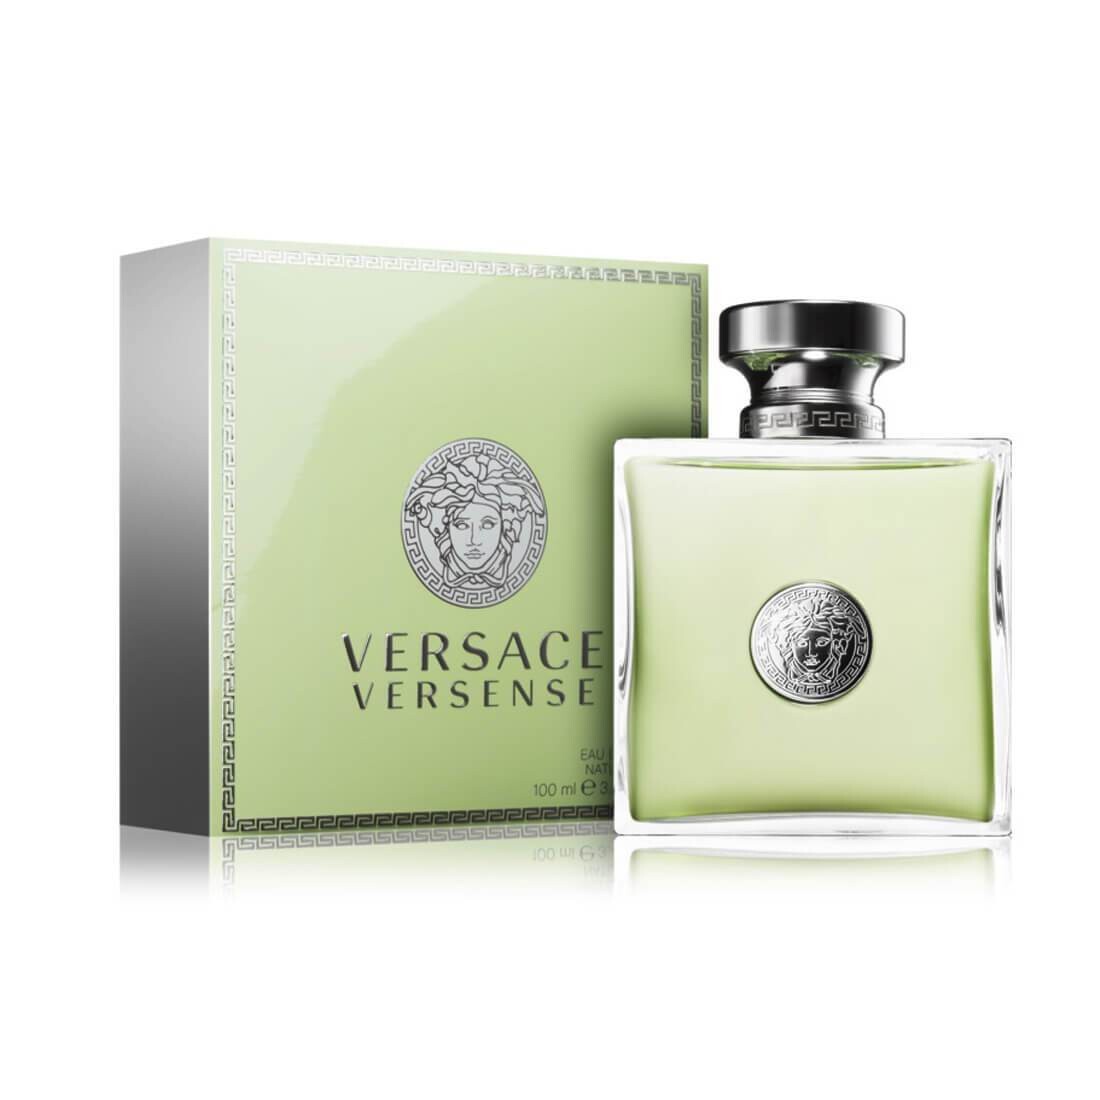 Versace Versense EDT Perfume For Women – 100ml